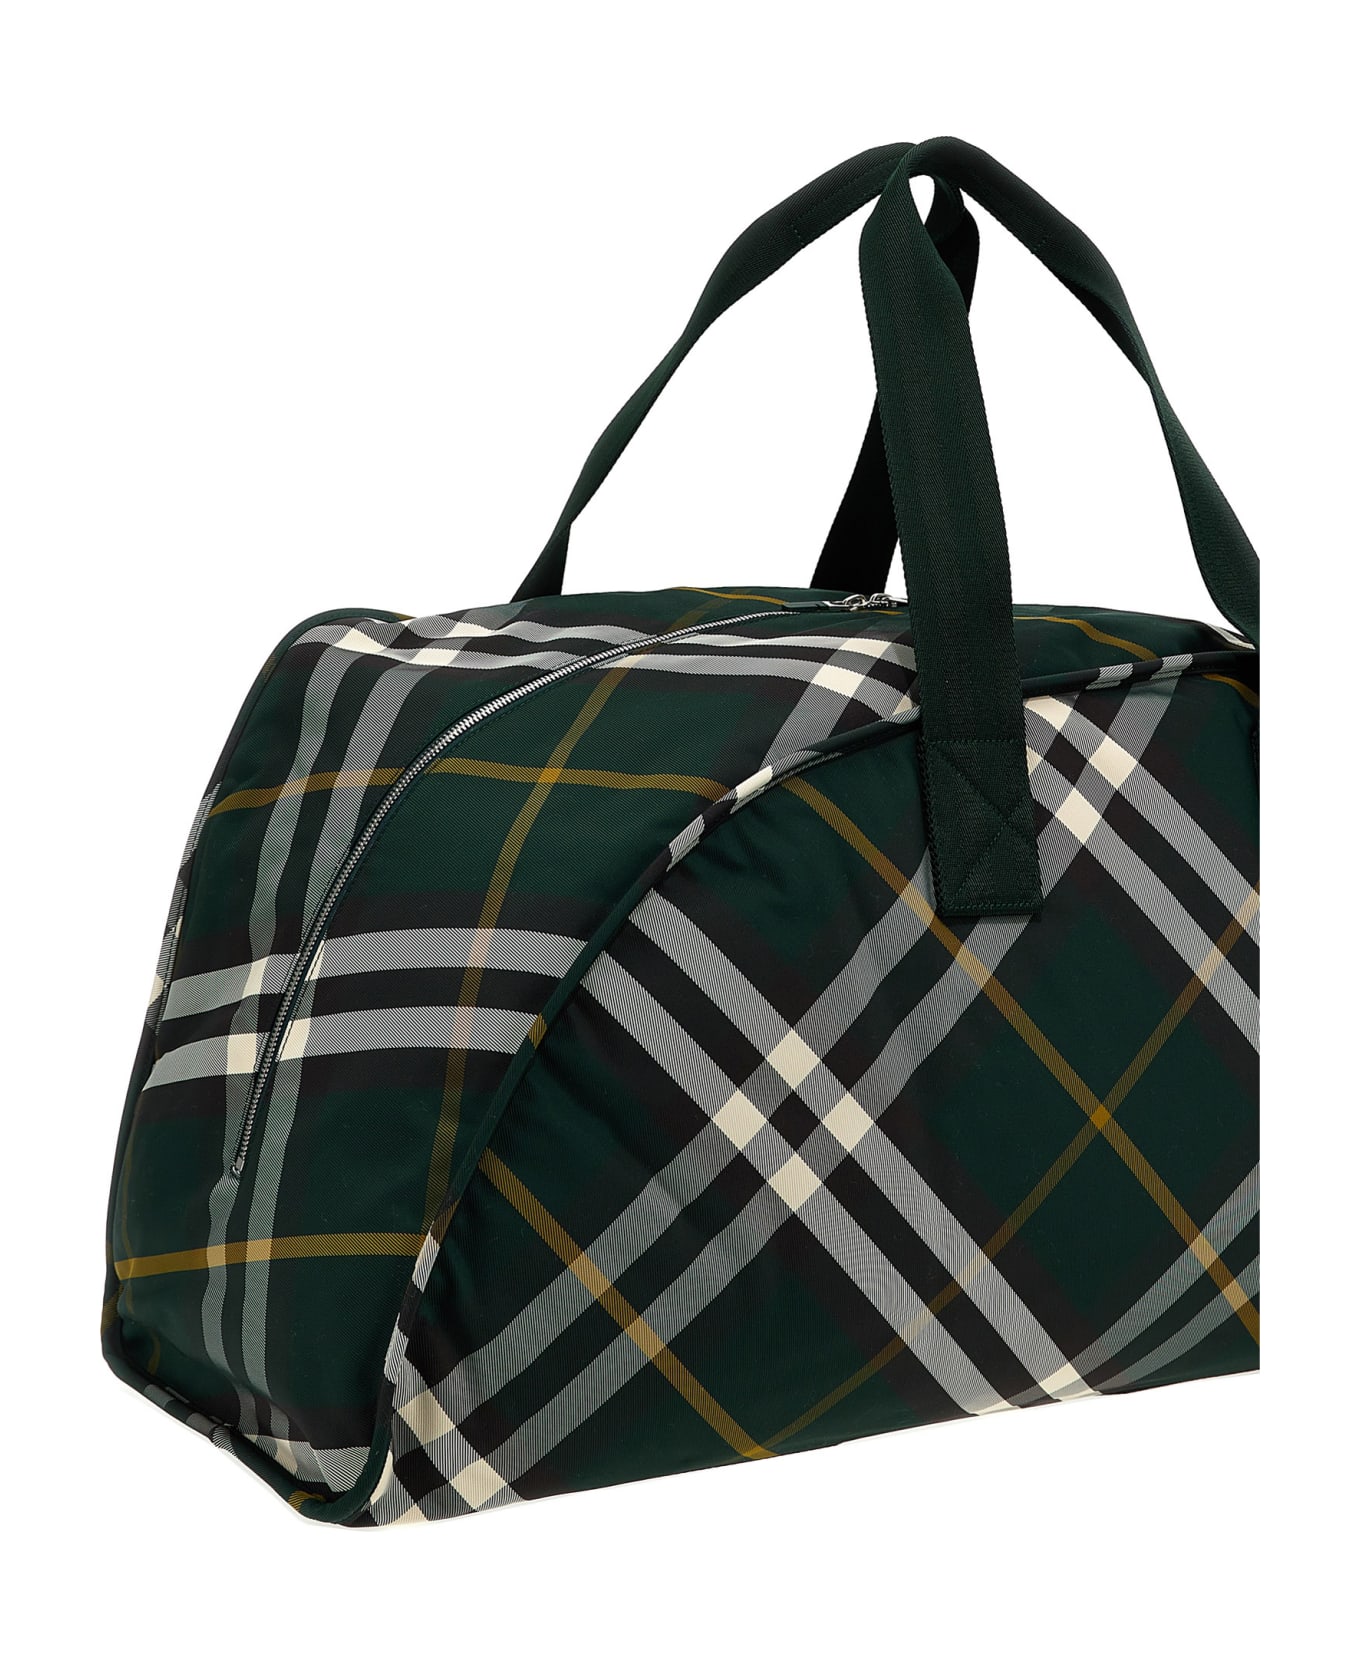 Burberry 'shield' Large Travel Bag - Green アクセサリー